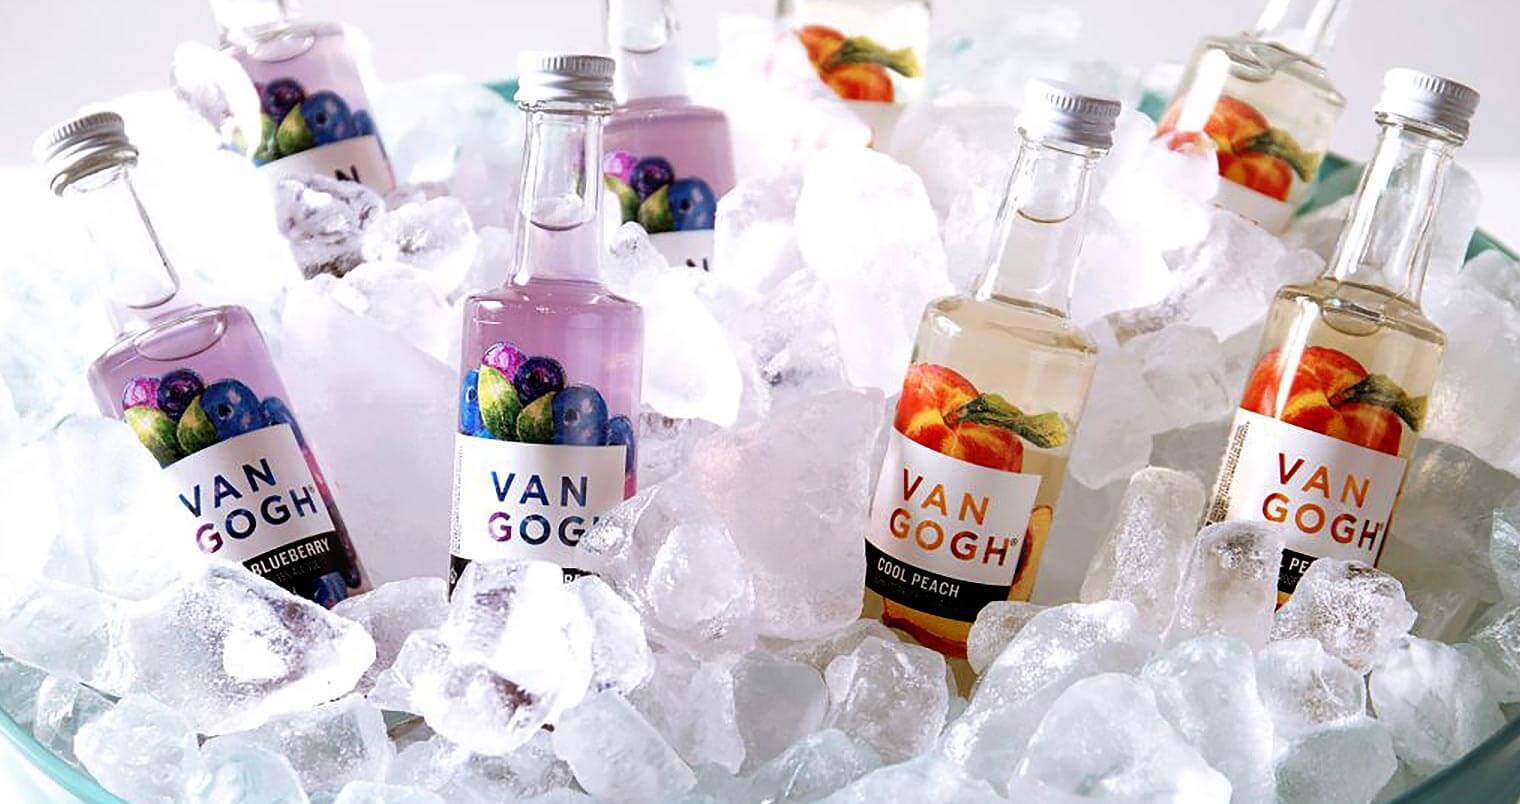 Van Gogh Mini-Tails, bottles on ice display, featured image